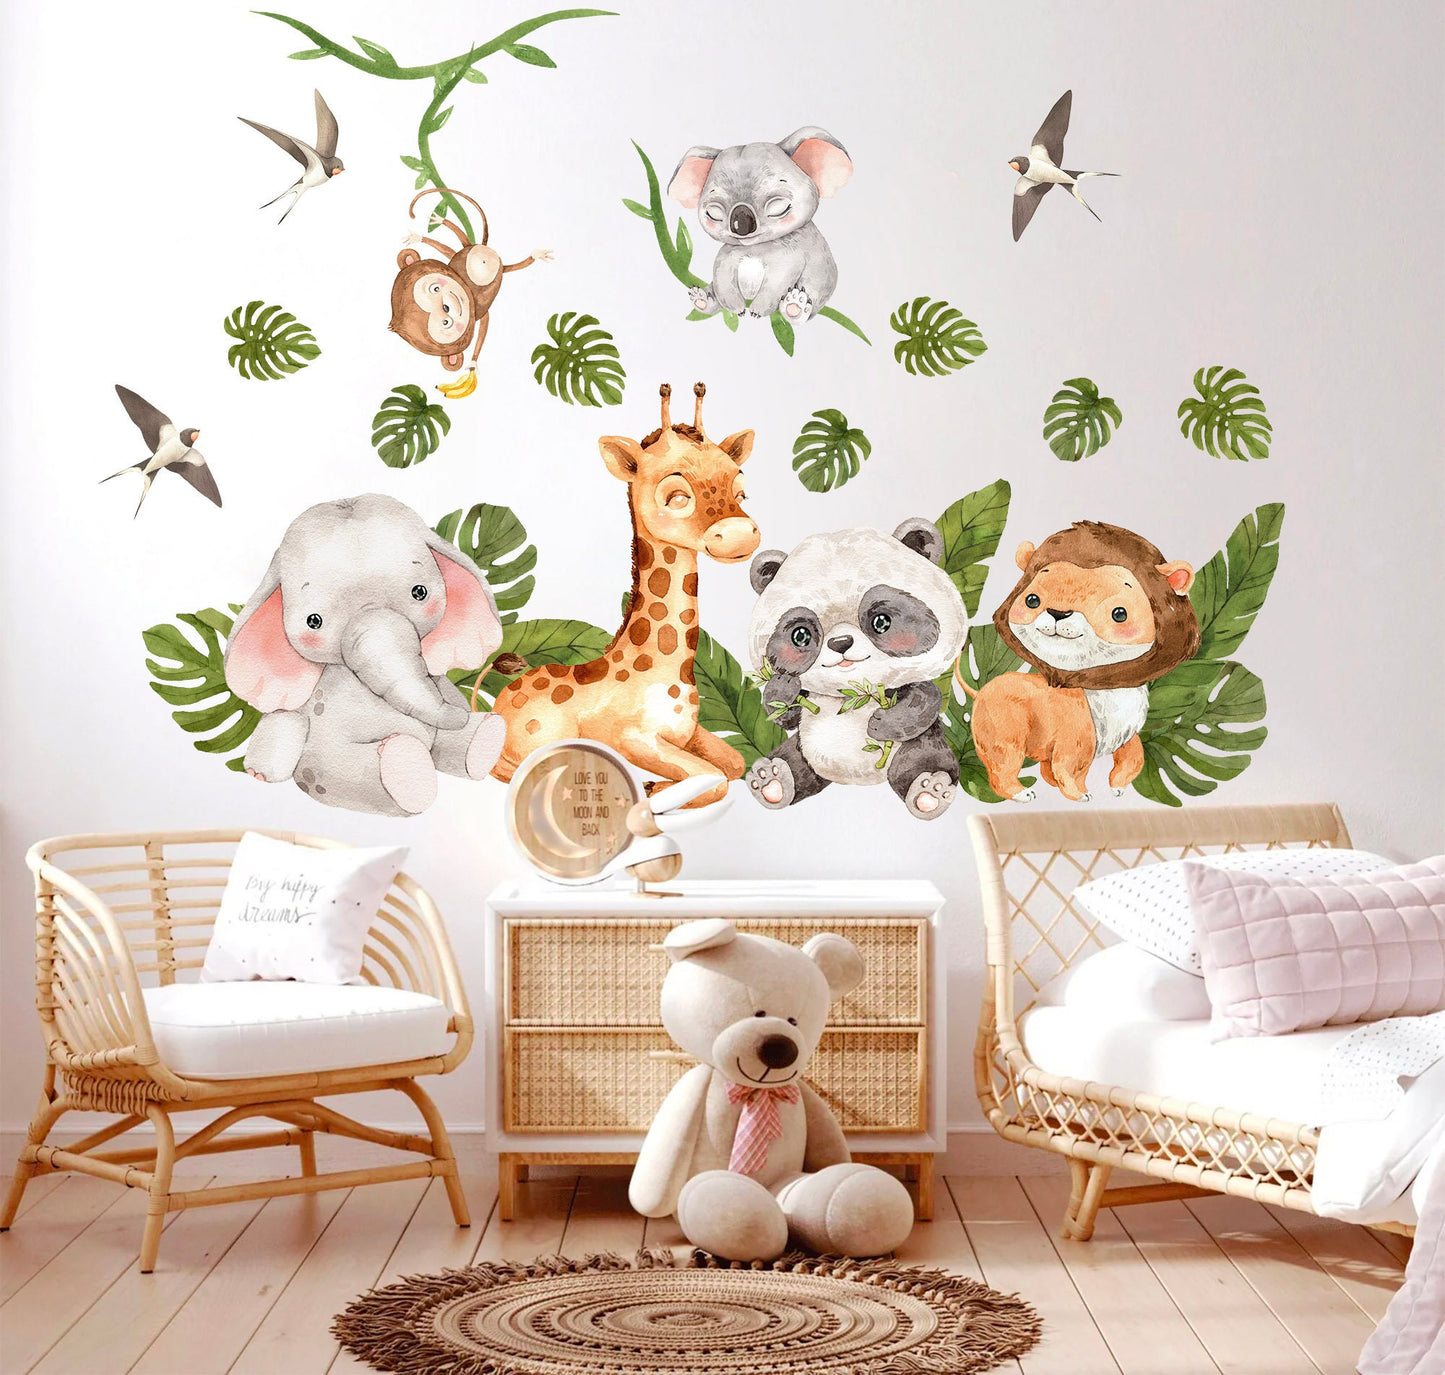 African Baby Animals Wall Decal - Giraffe, Elephant, Lion, Panda, Monkey, Koala in Palm Leaves - BR321